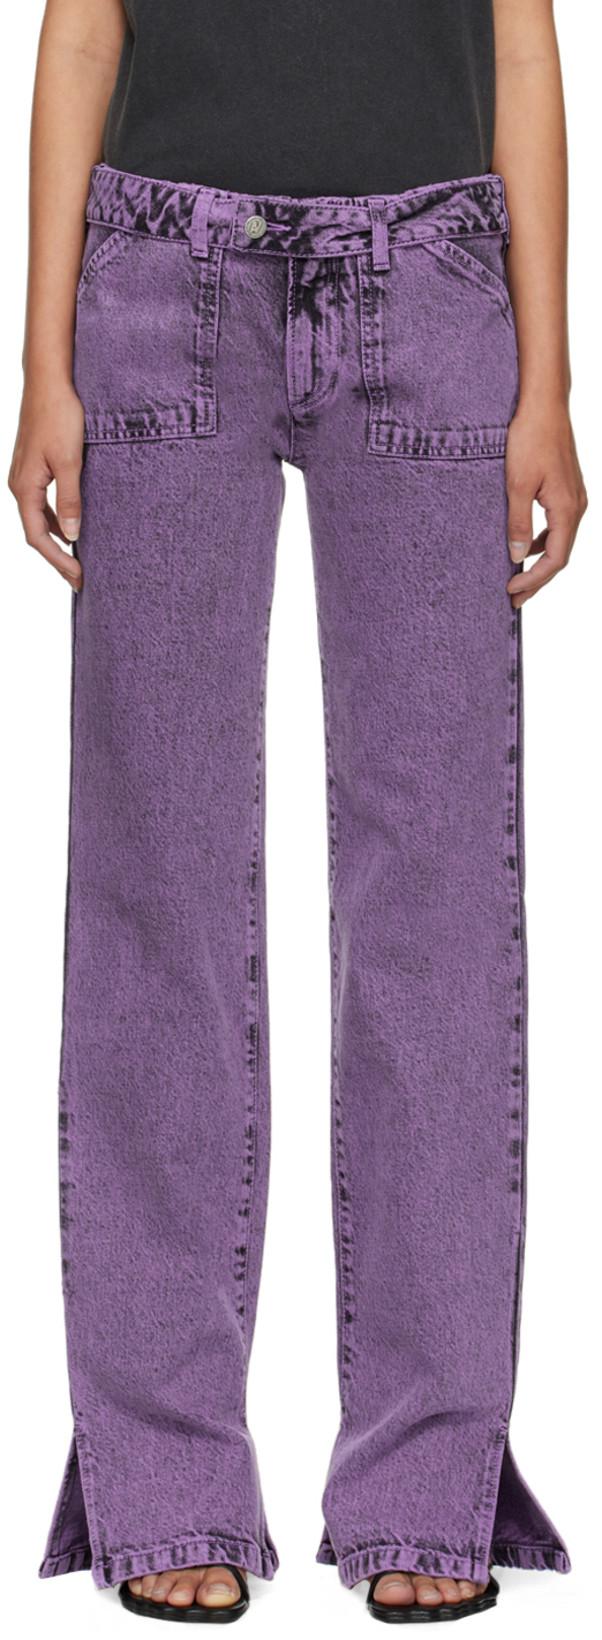 Purple Faded Jeans by AVAVAV